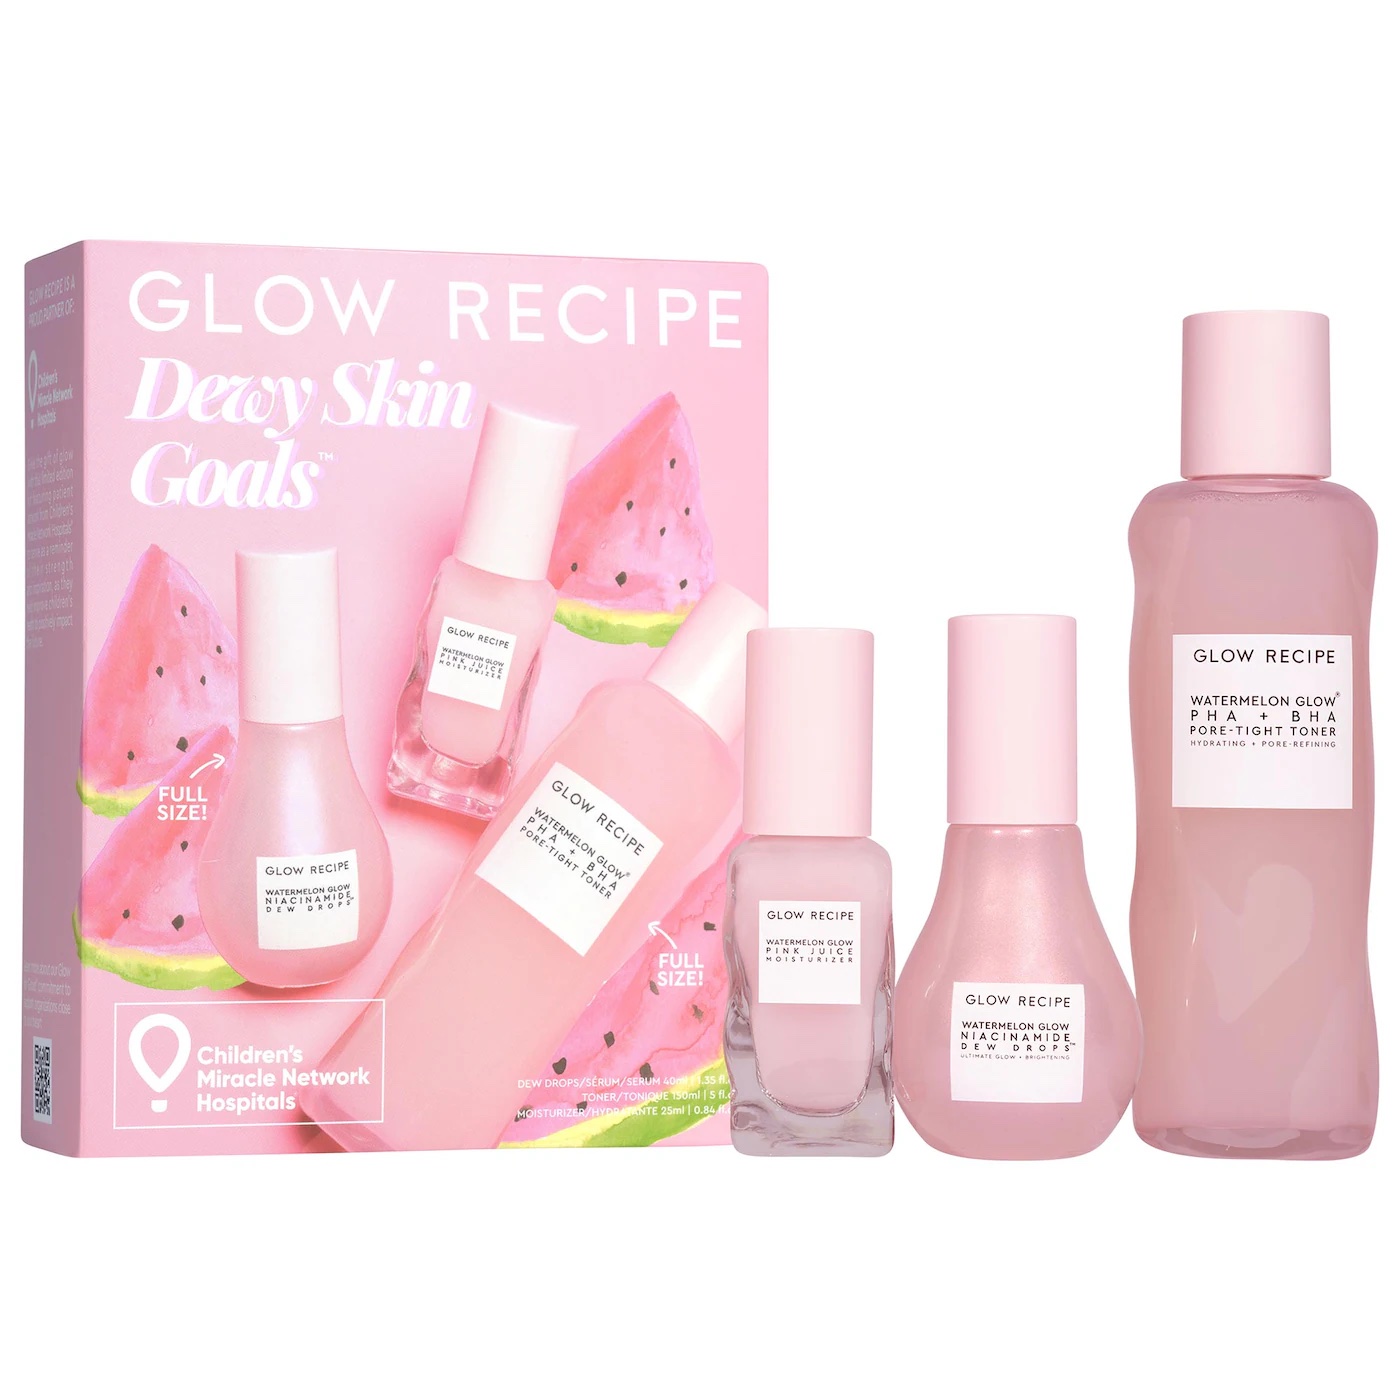 Glow Recipe Dewy Skin Goals Kit